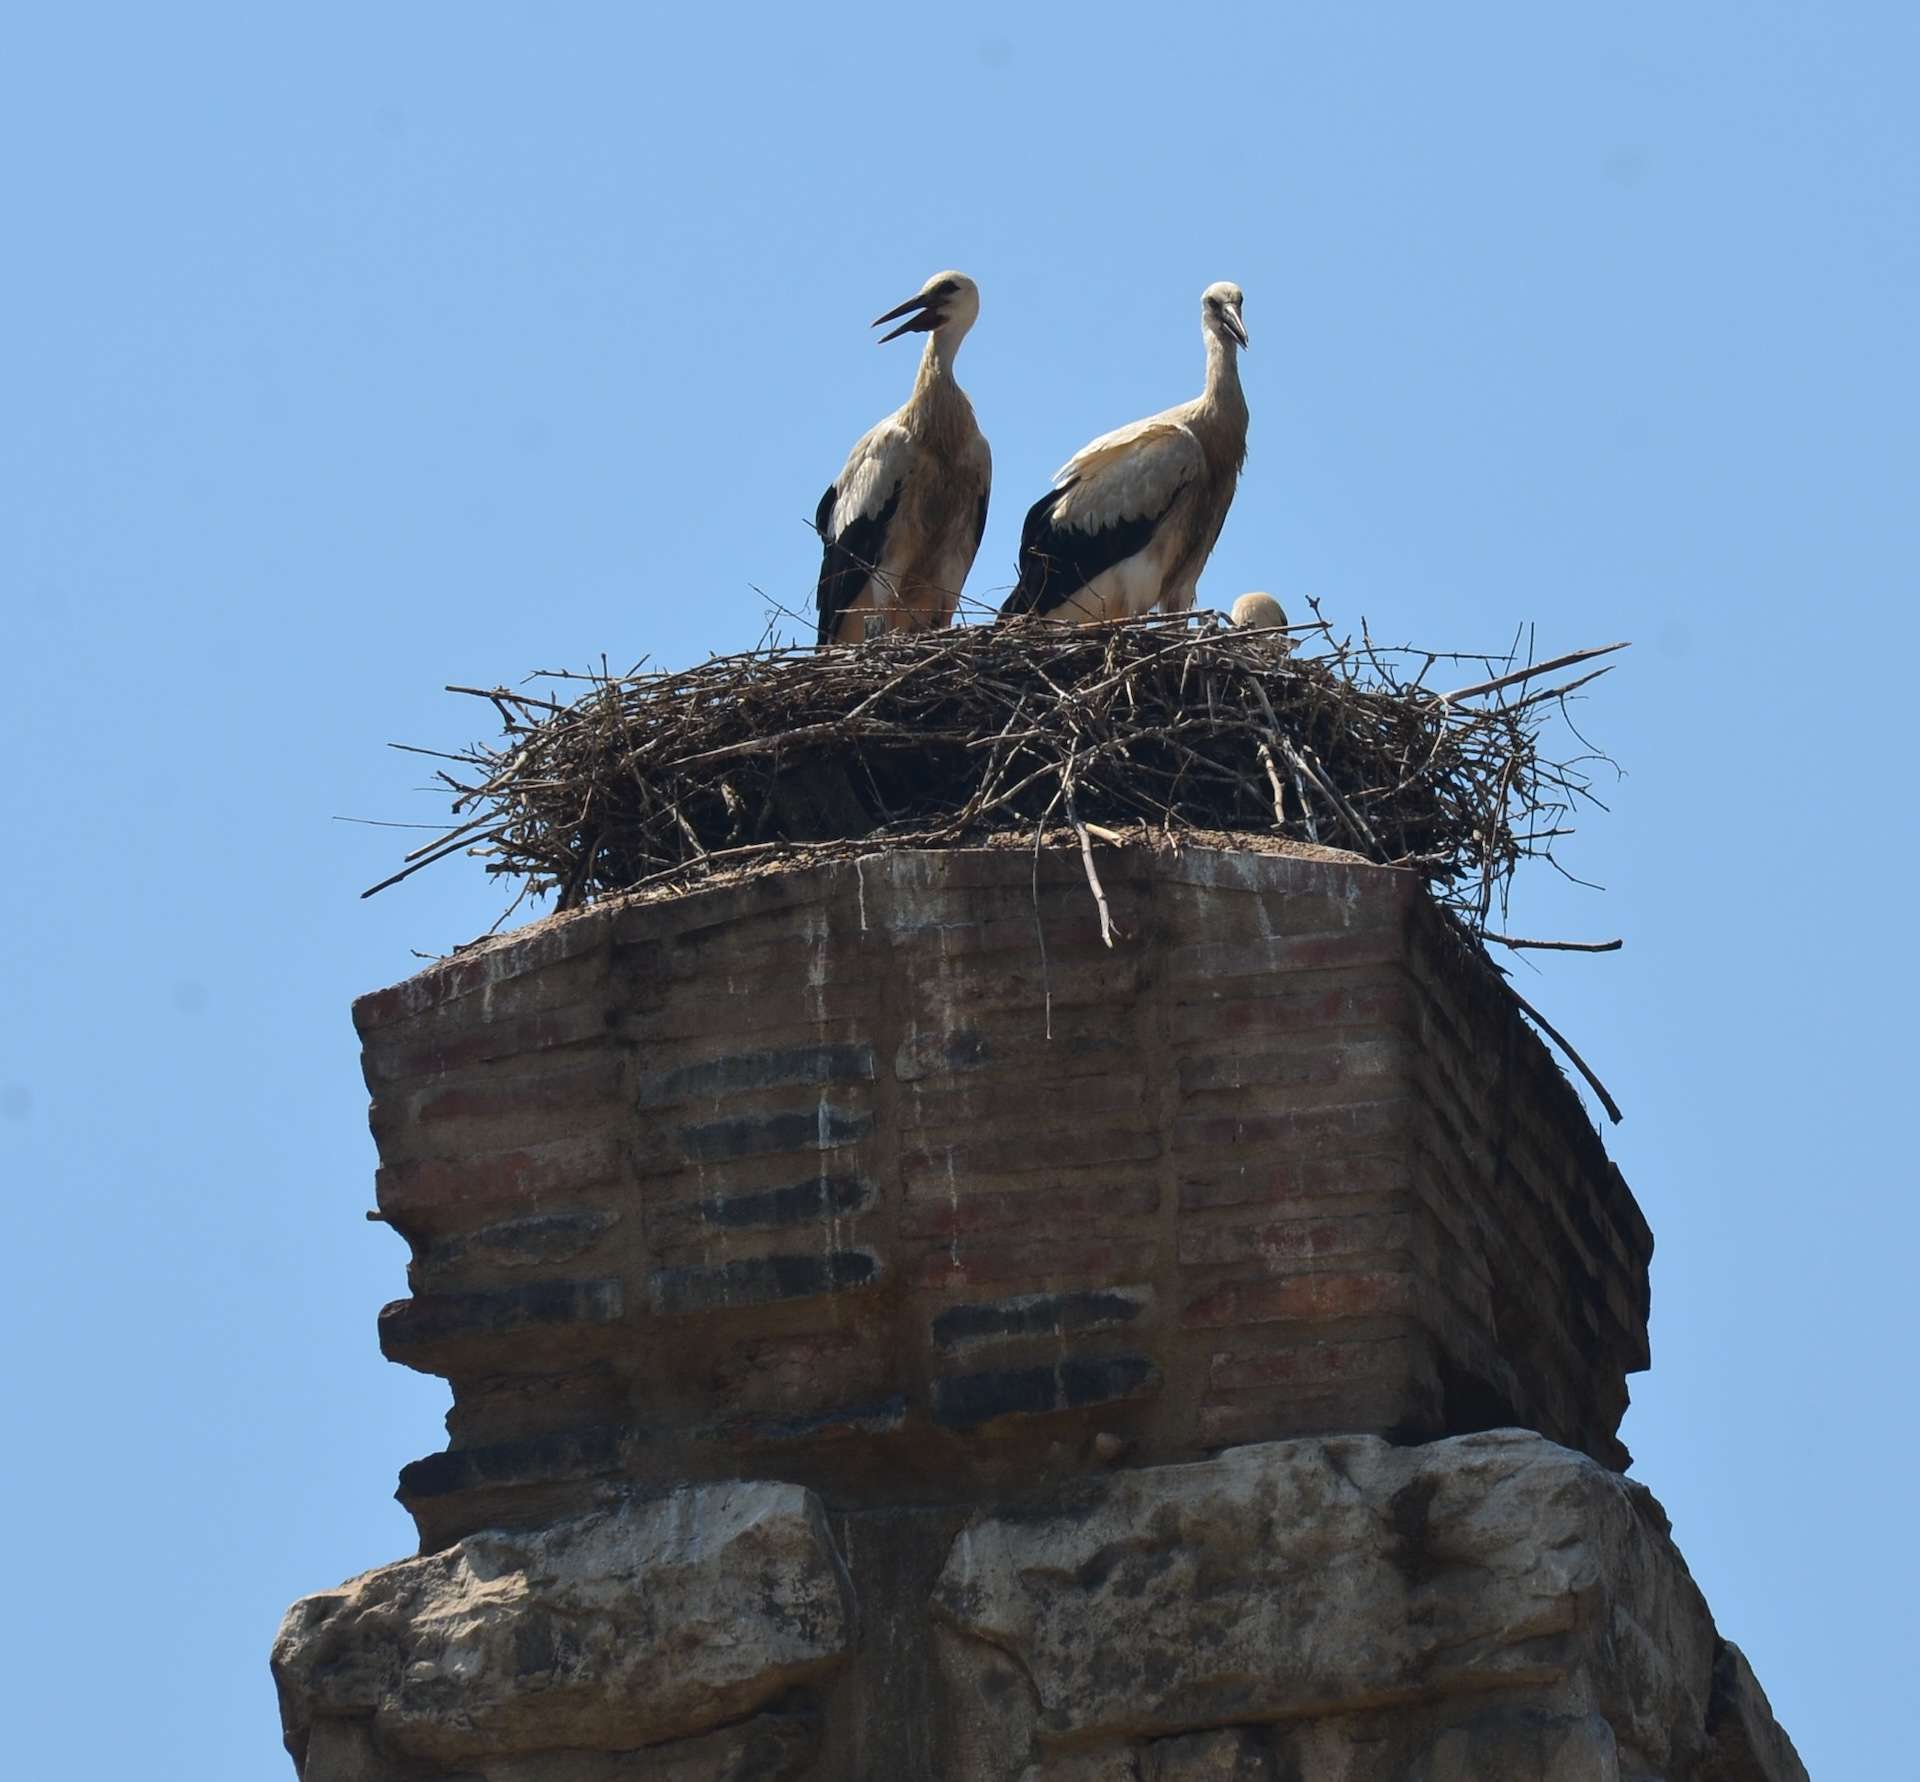 Stork nest on the Byzantine aqueduct in Selçuk, Turkey